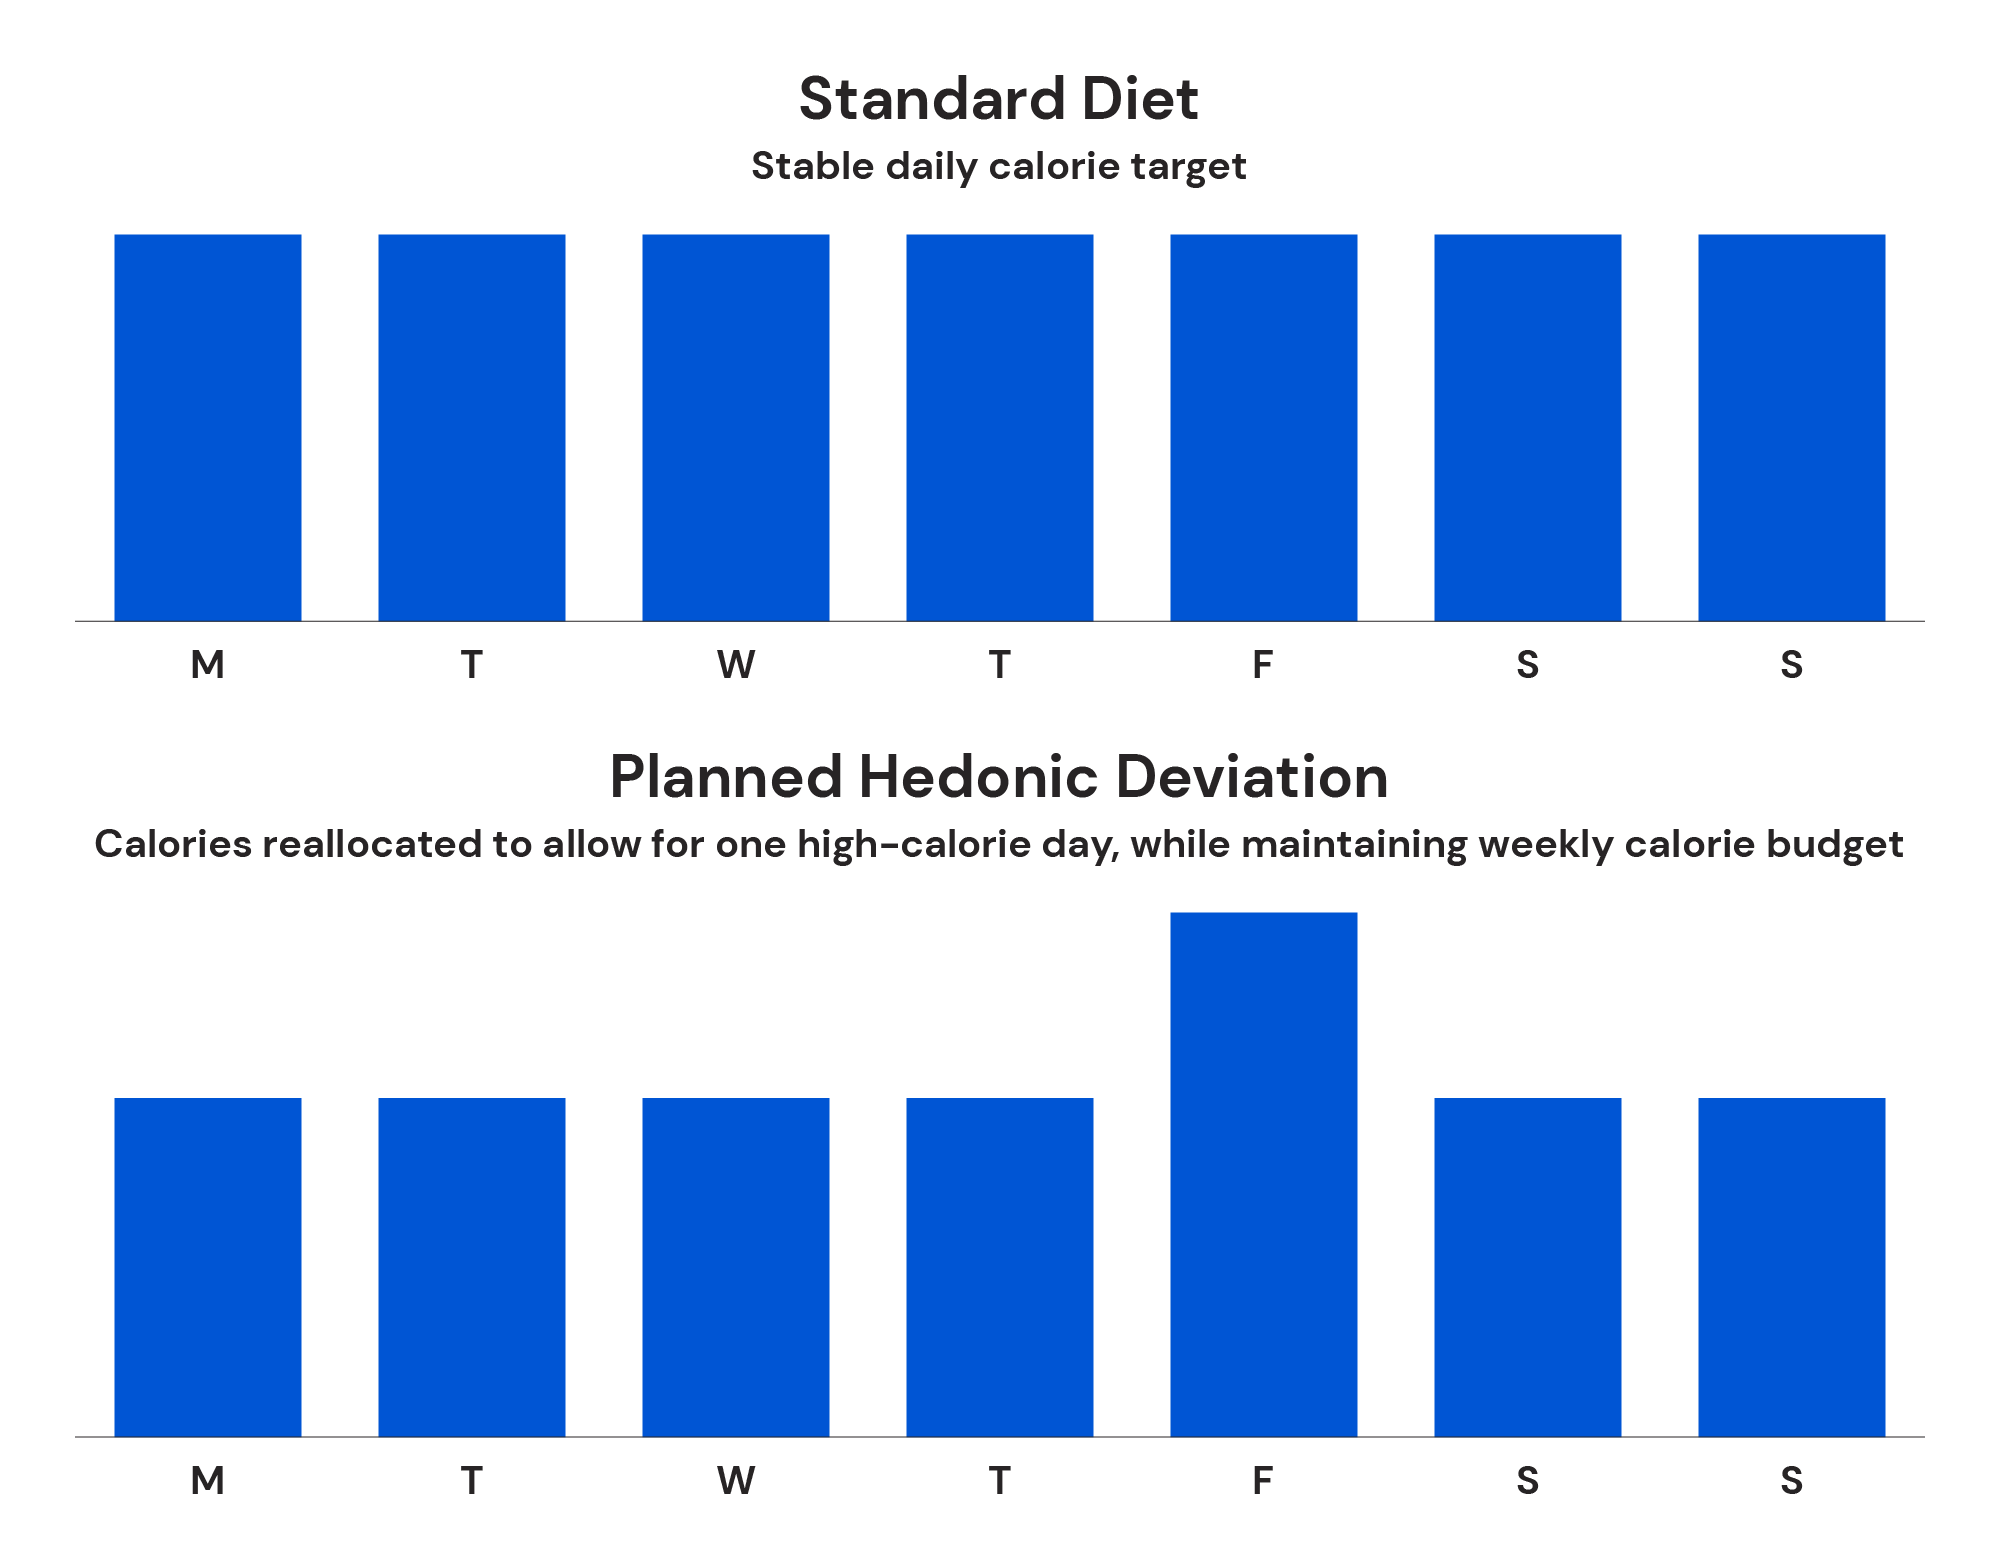 Standard diet vs planned hedonic deviation calorie targets